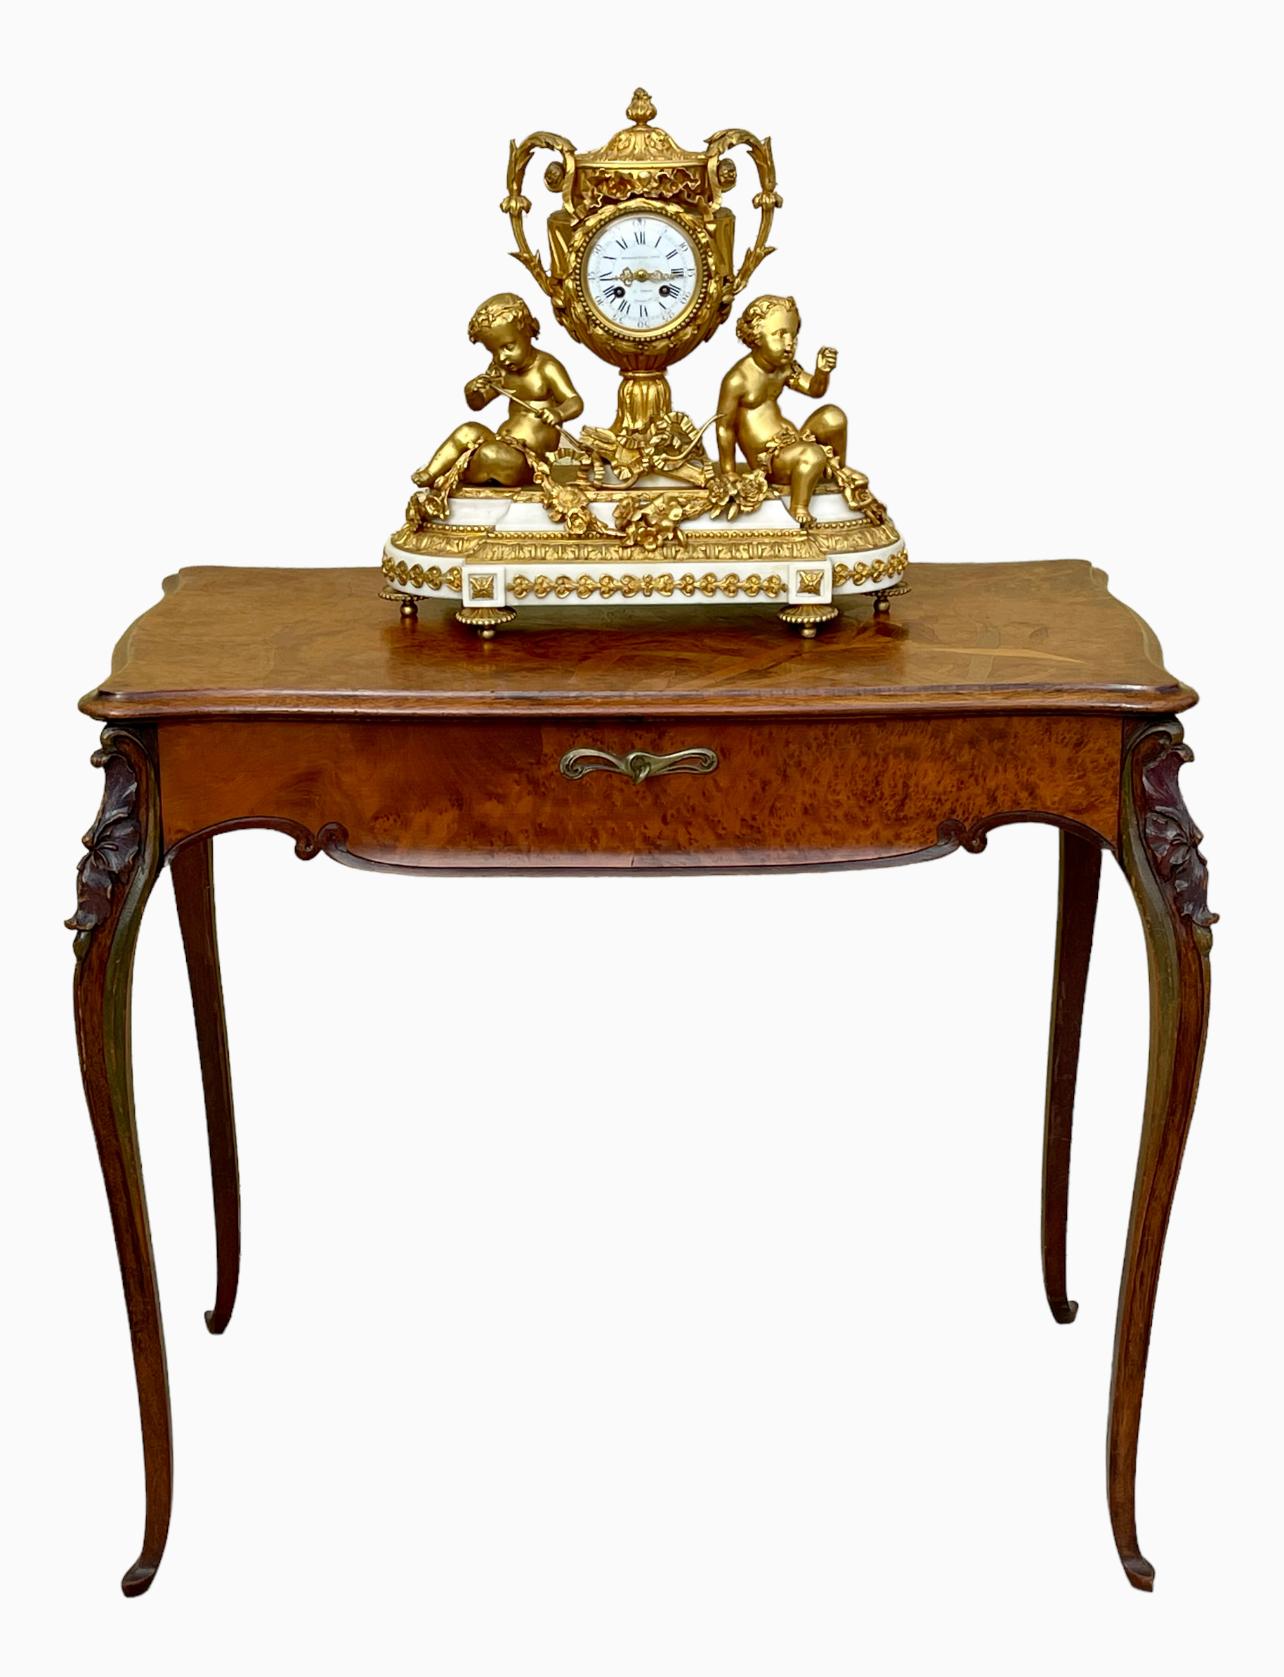 MONBRO Aîné Son & JACQUIER - Bronze and Marble Clock with Puttis, XIXth century For Sale 6